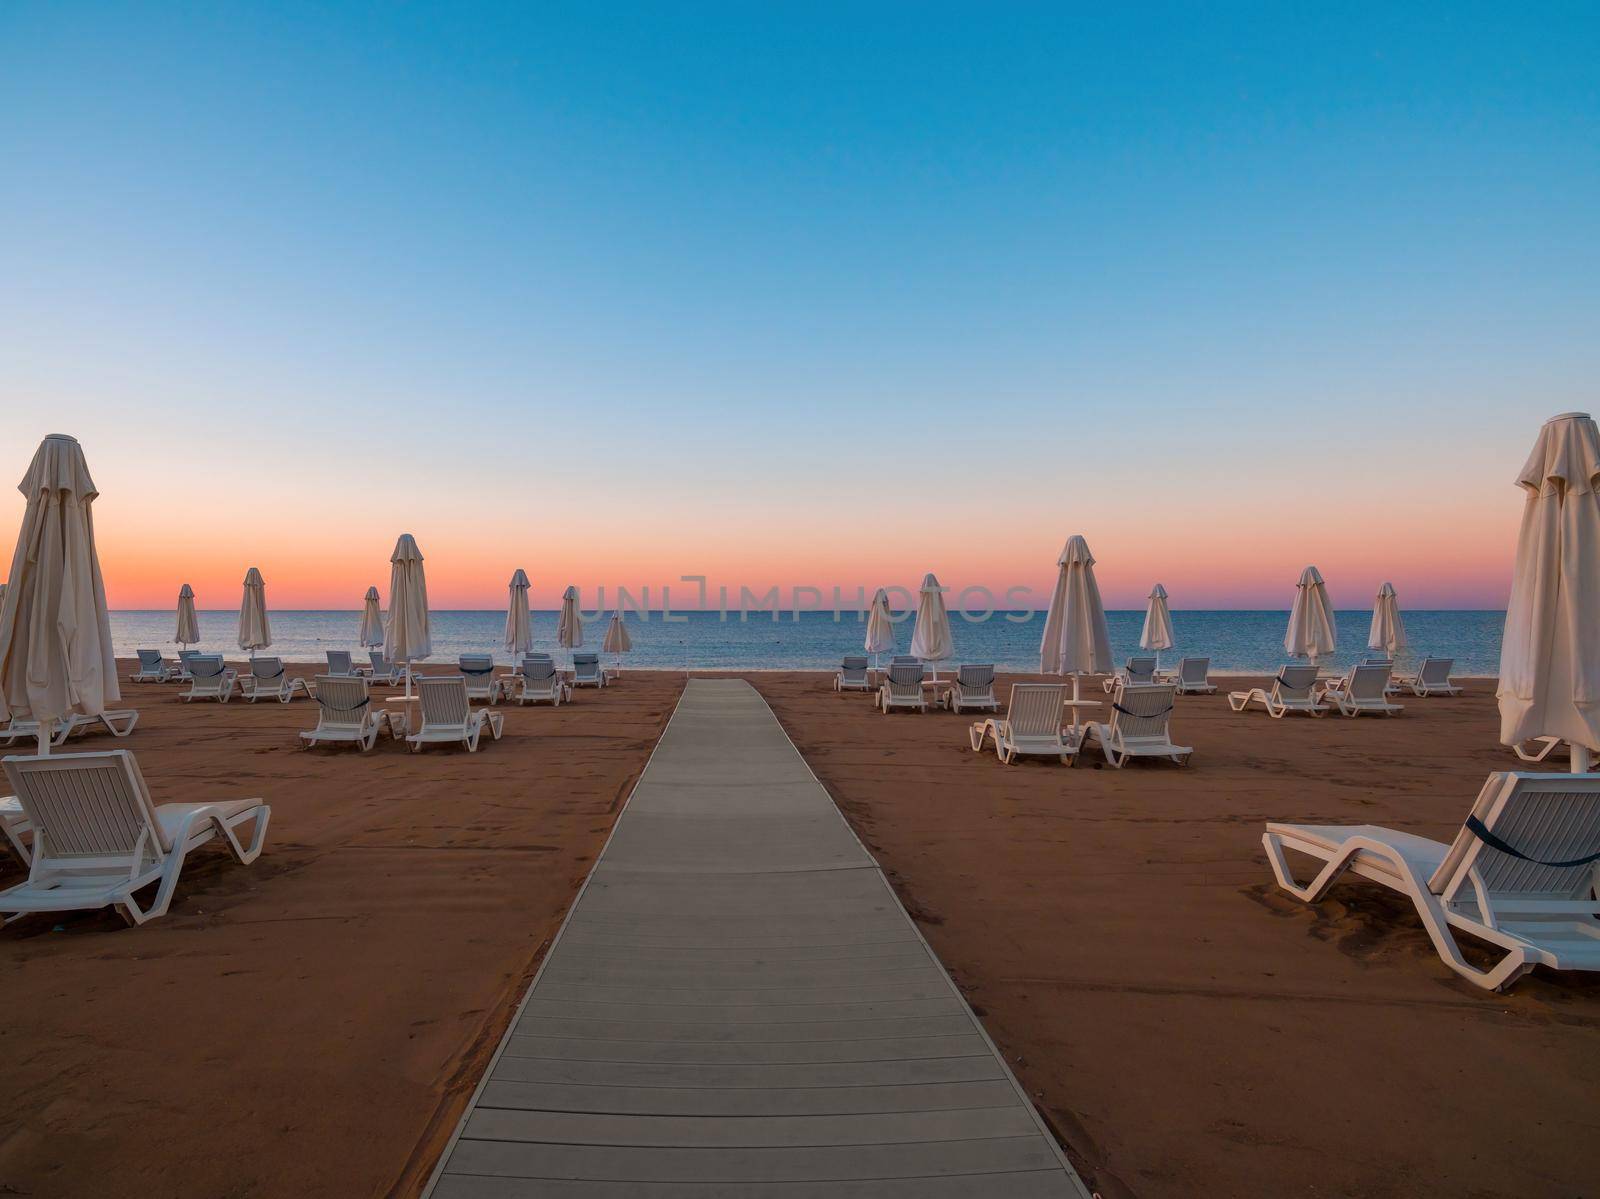 Umbrellas and sun loungers on the calm sea beach at sunrise by Sonat